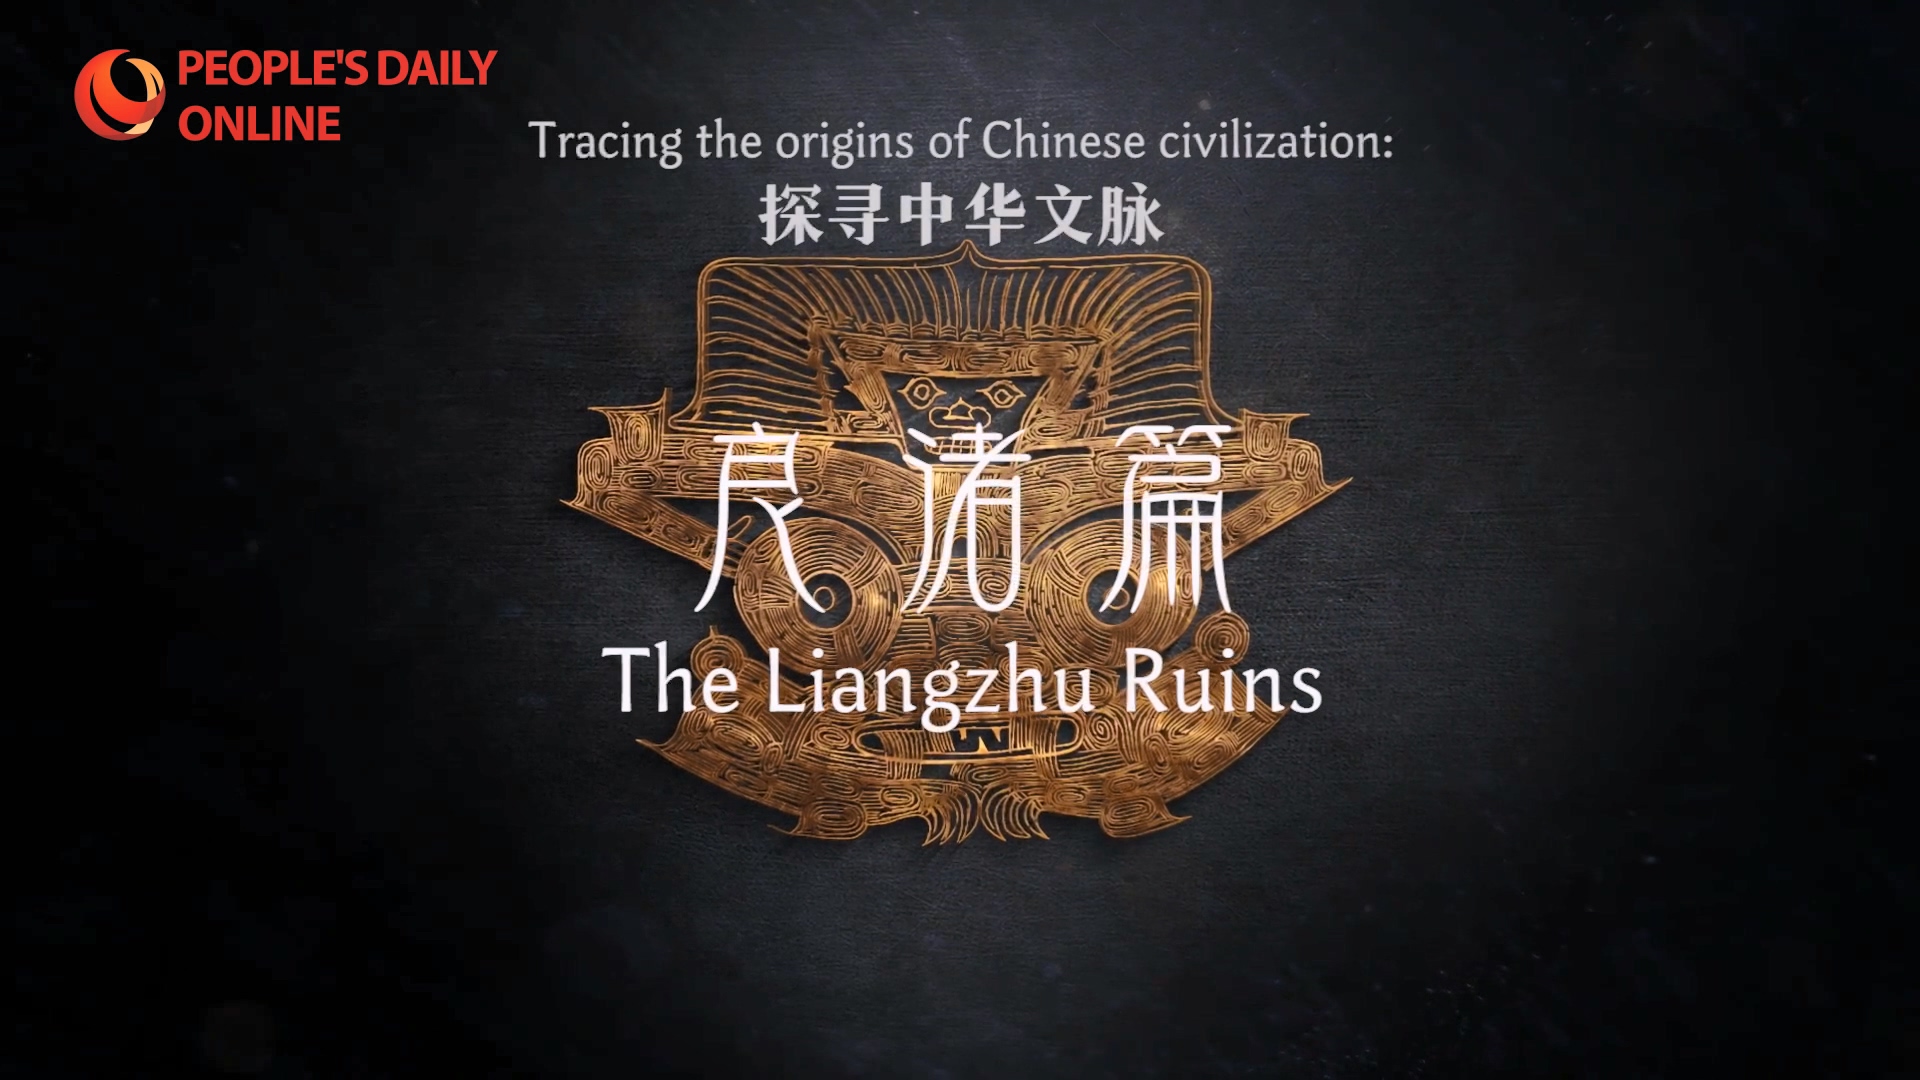 Exploring glory of 5,000-year Chinese civilization at Liangzhu site